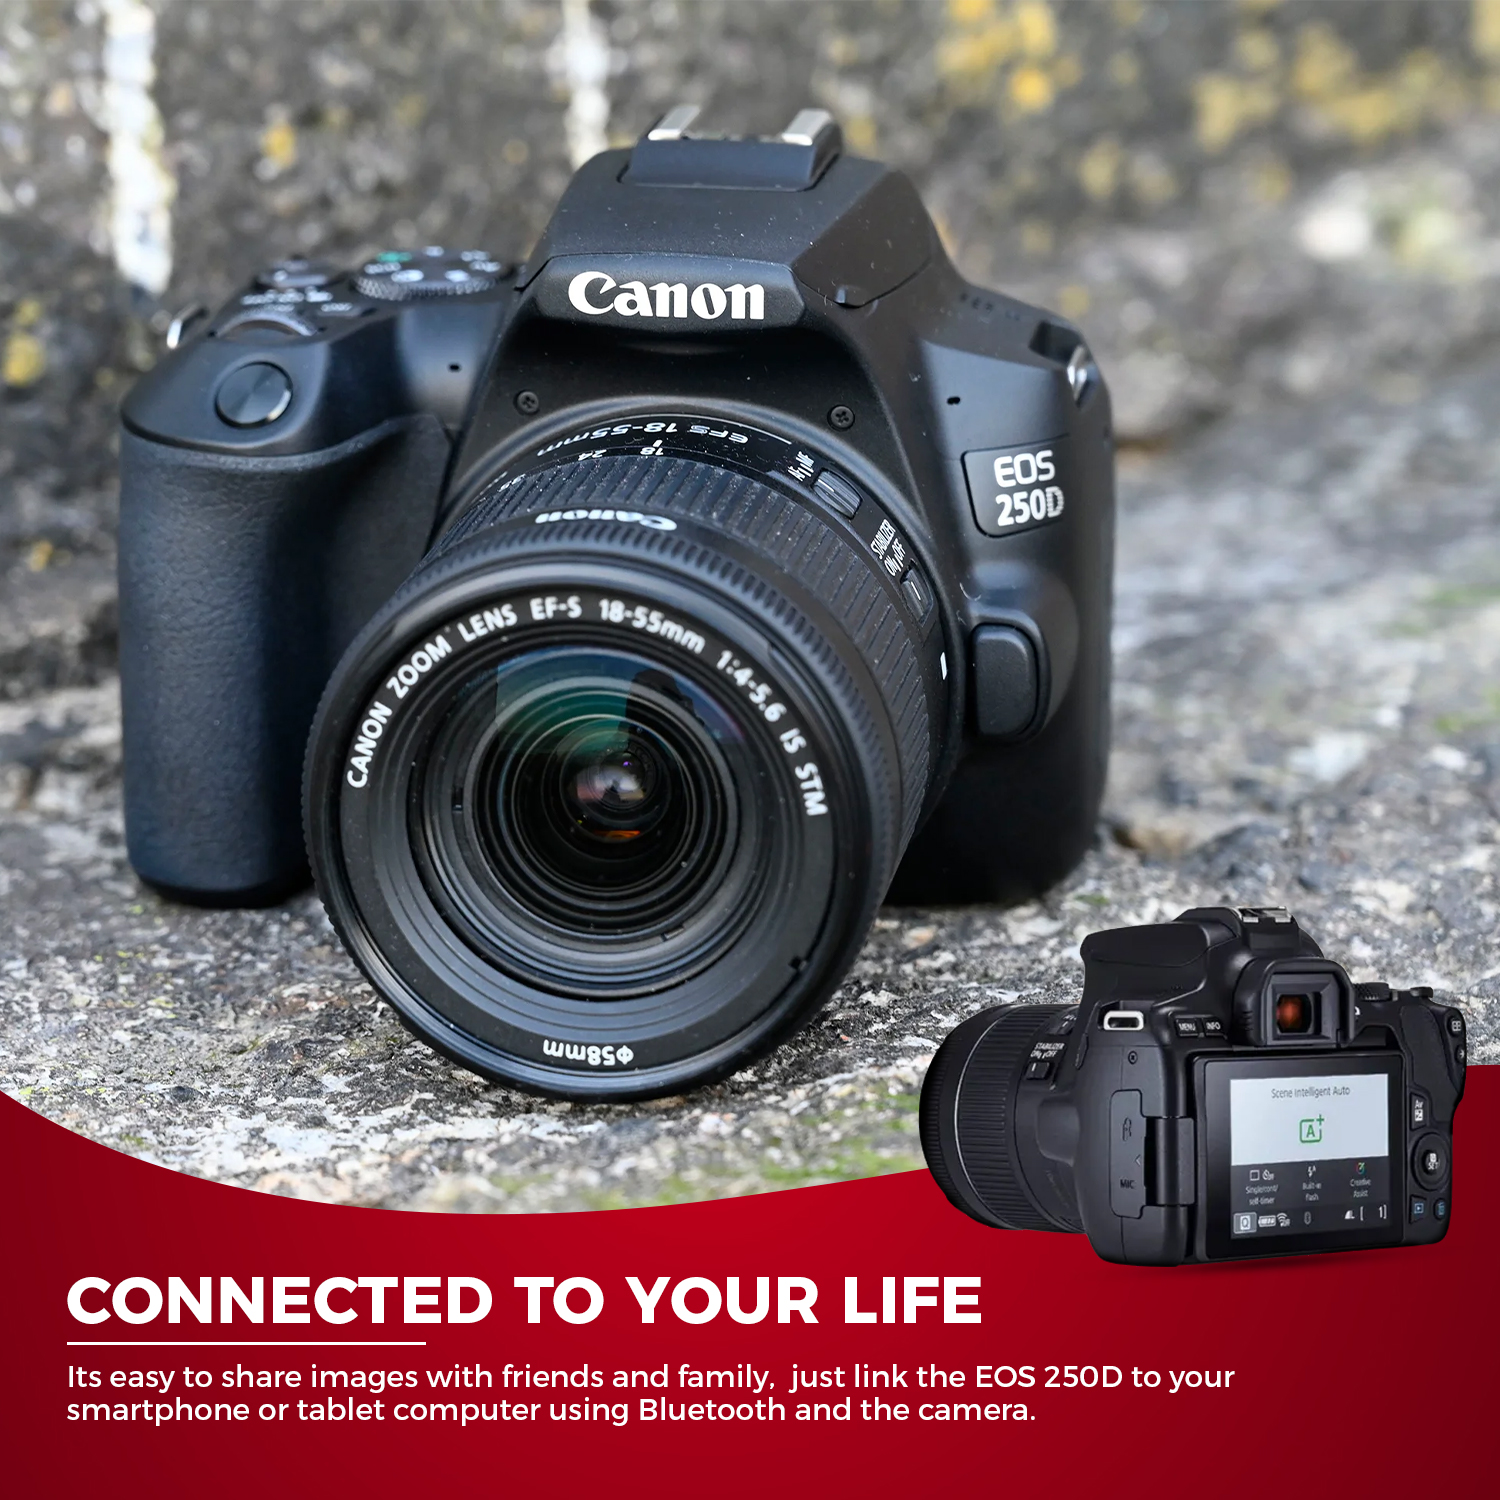 Canon EOS 250D / Rebel SL3 DSLR Camera with 18-55mm Lens (Black) + Creative Filter Set, EOS Camera Bag +  Sandisk Ultra 64GB Card + Electronics Cleaning Set, And More (International Model) - image 2 of 7